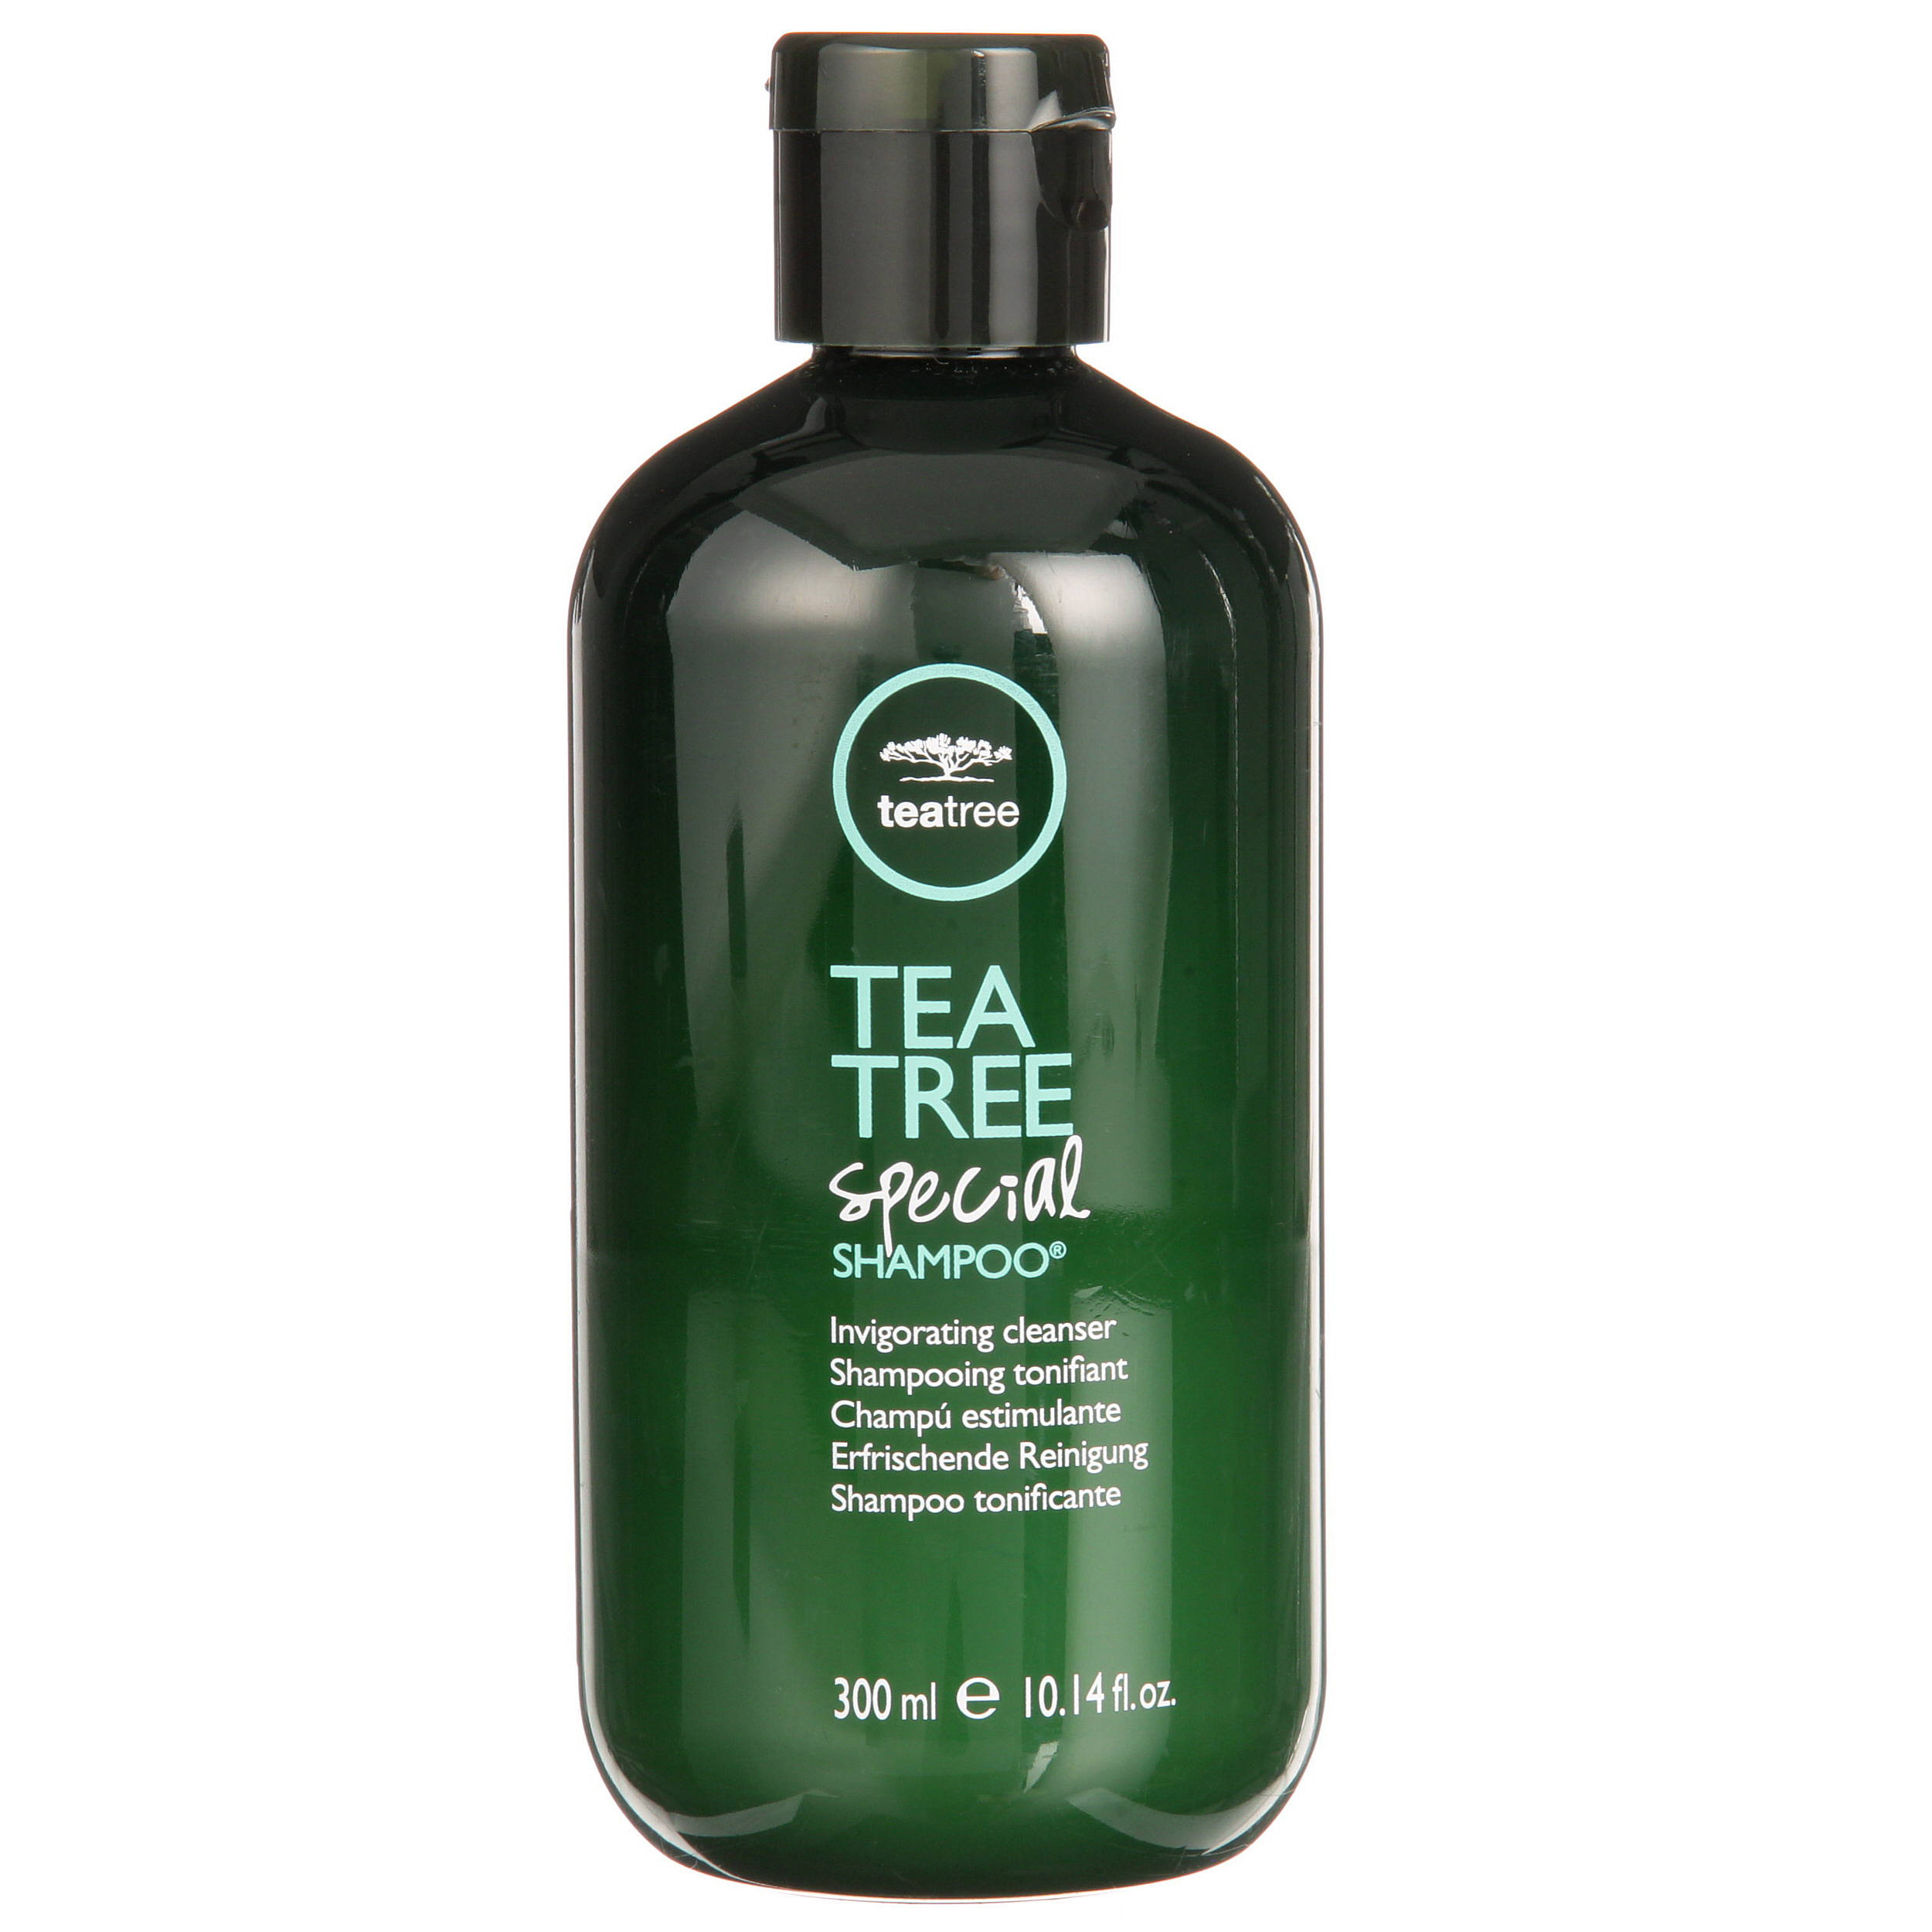 Paul Mitchell Moisturizing & Shine Enhancing Daily Shampoo with Tea Tree Oil, Scented, 10.14 fl oz - image 2 of 5